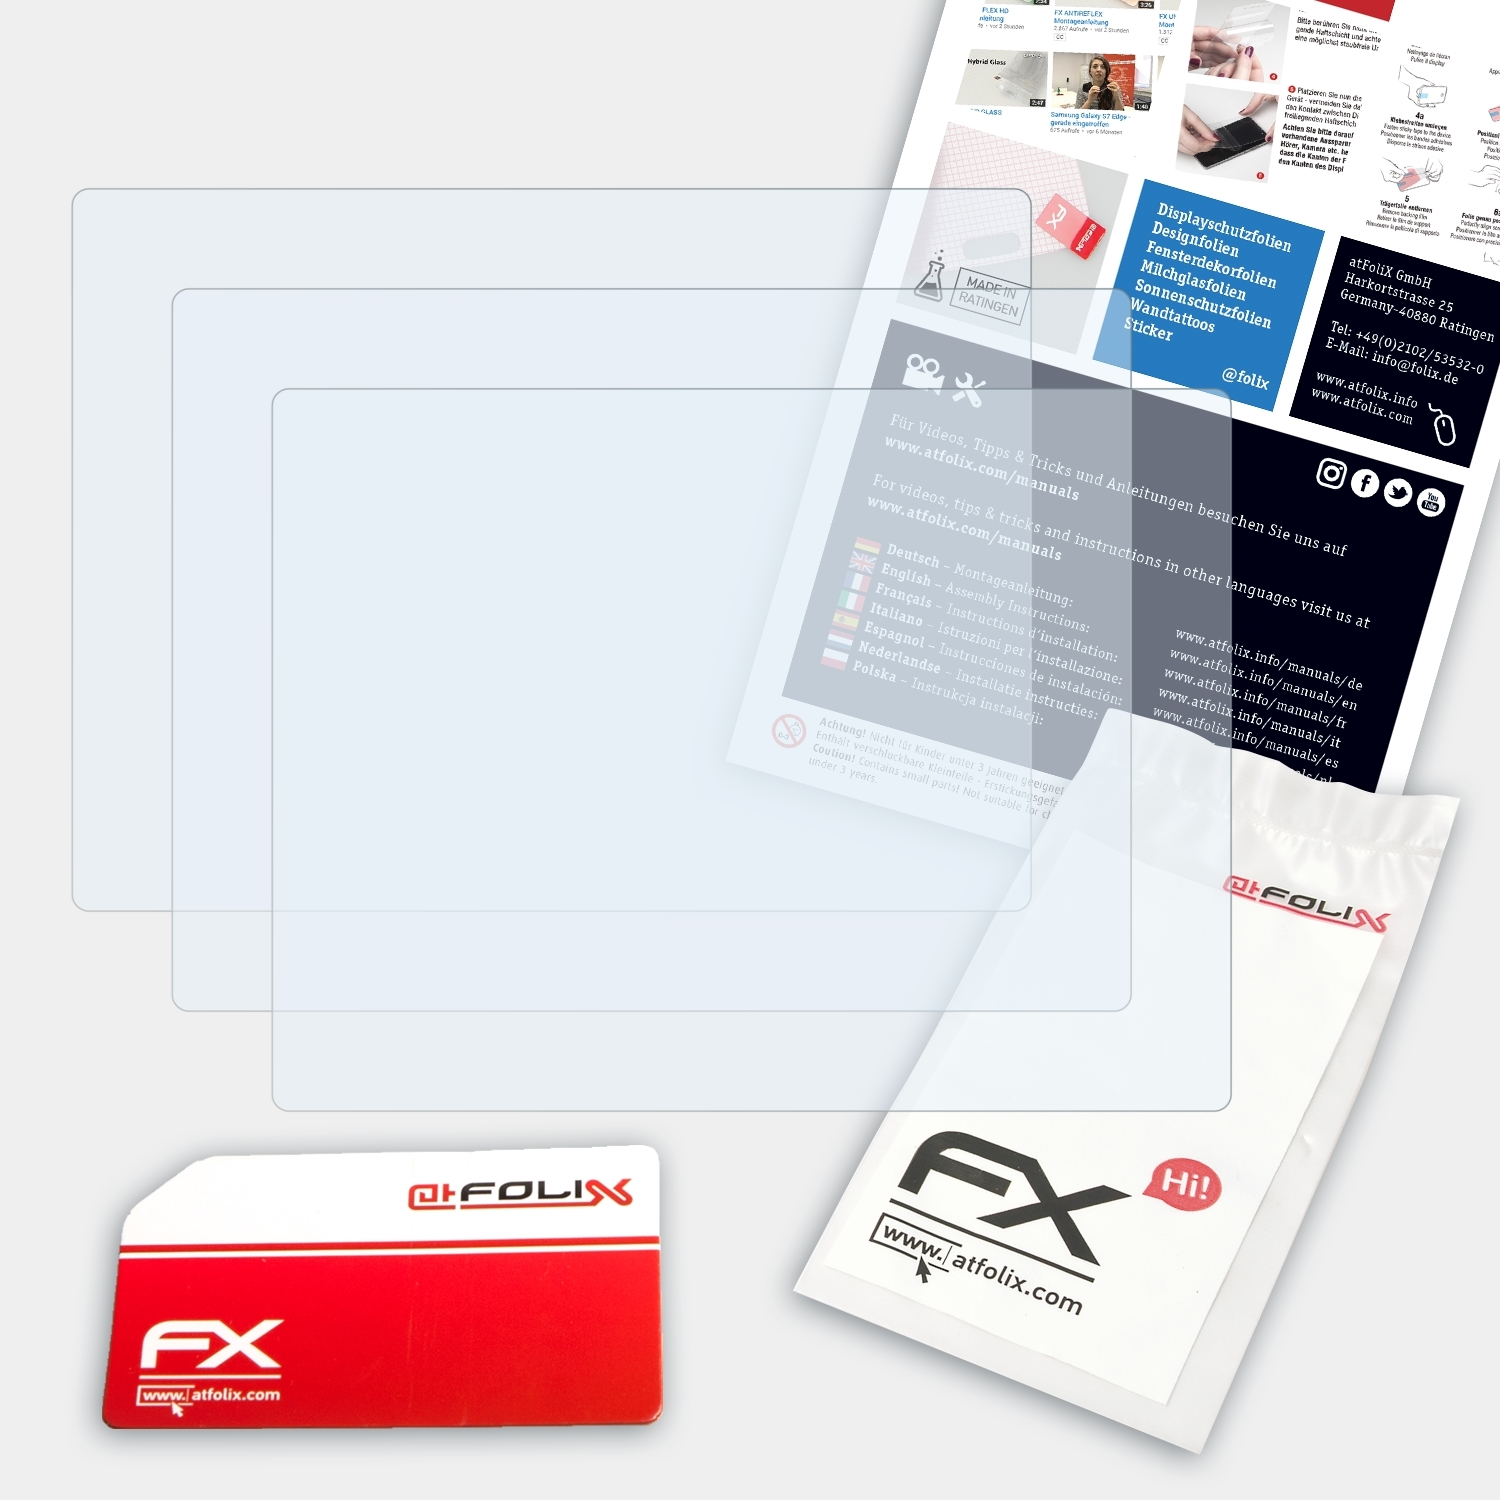 3x FX-Clear ATFOLIX X100) FinePix Fujifilm Displayschutz(für